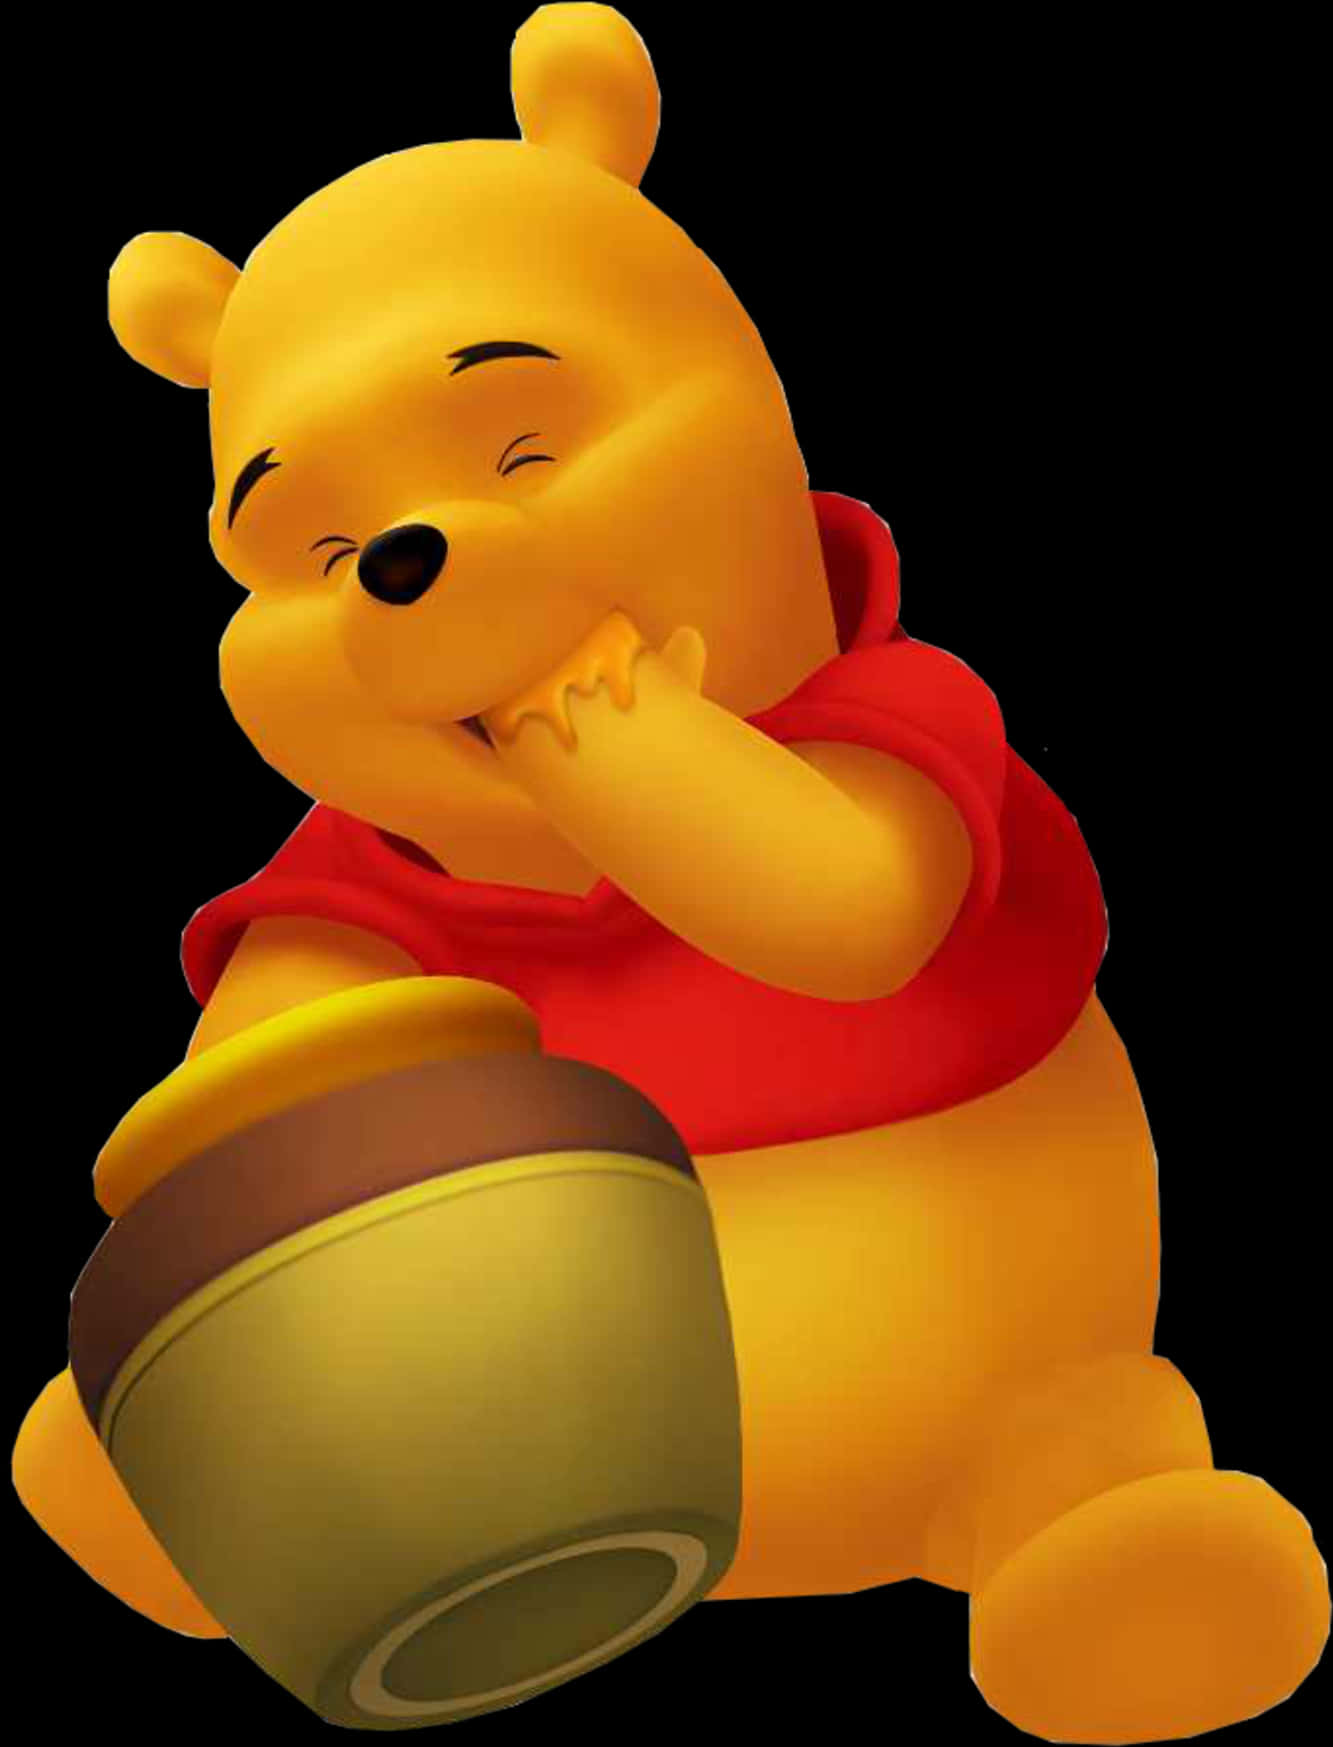 A Cartoon Character Holding A Pot Of Honey